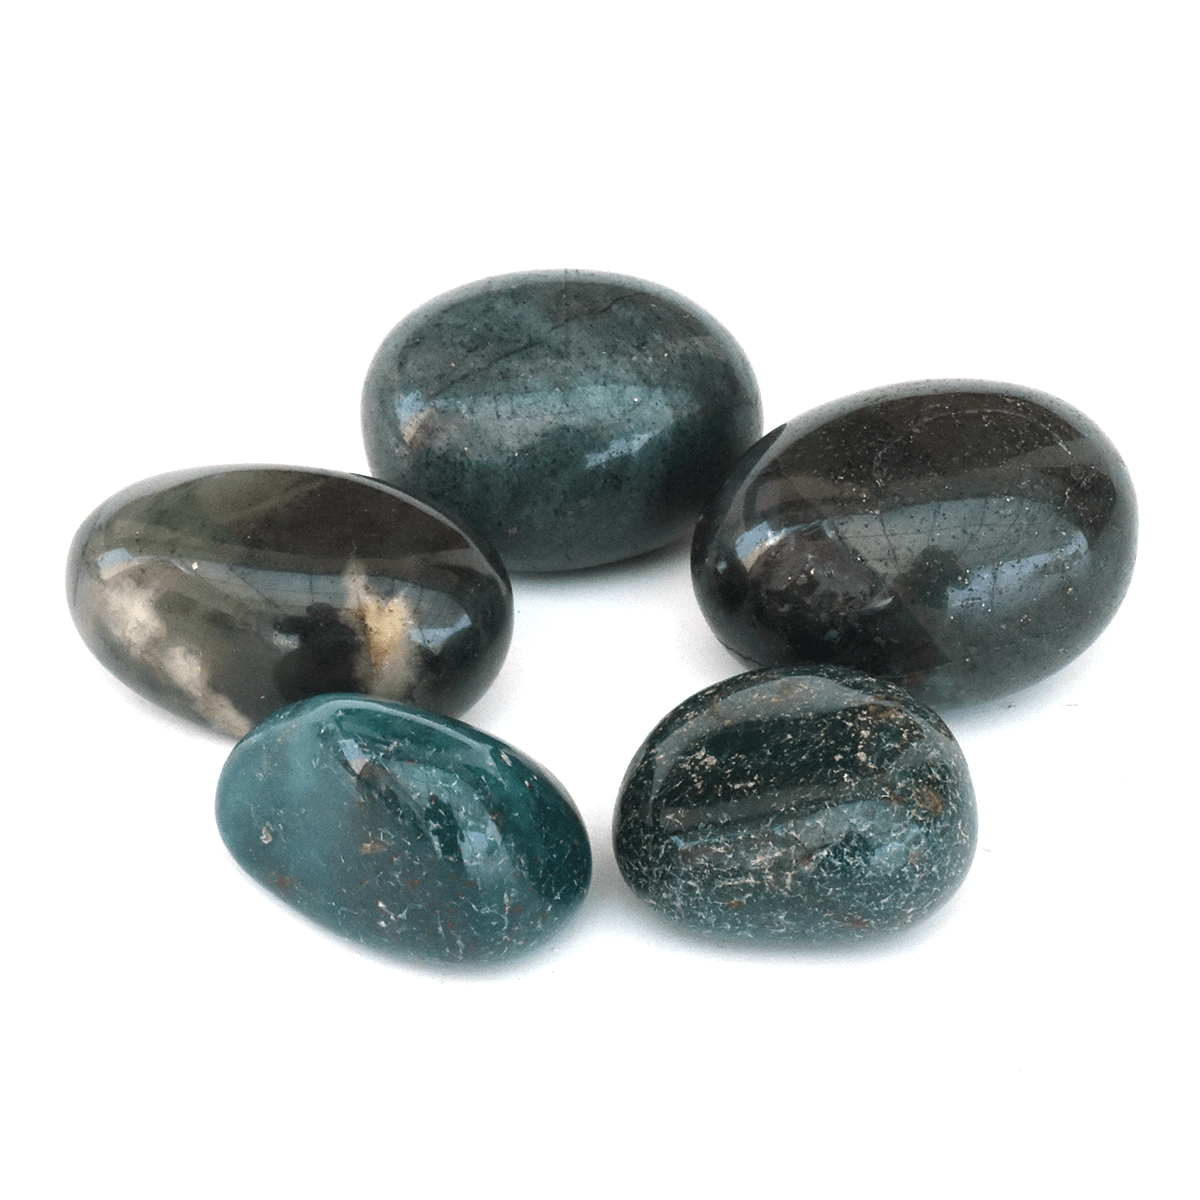 Bloodstone Tumble Stone 5 Pcs, Crystal Green Bloodstone Gemstone Pebble for Asymmetrical Crystal Stone